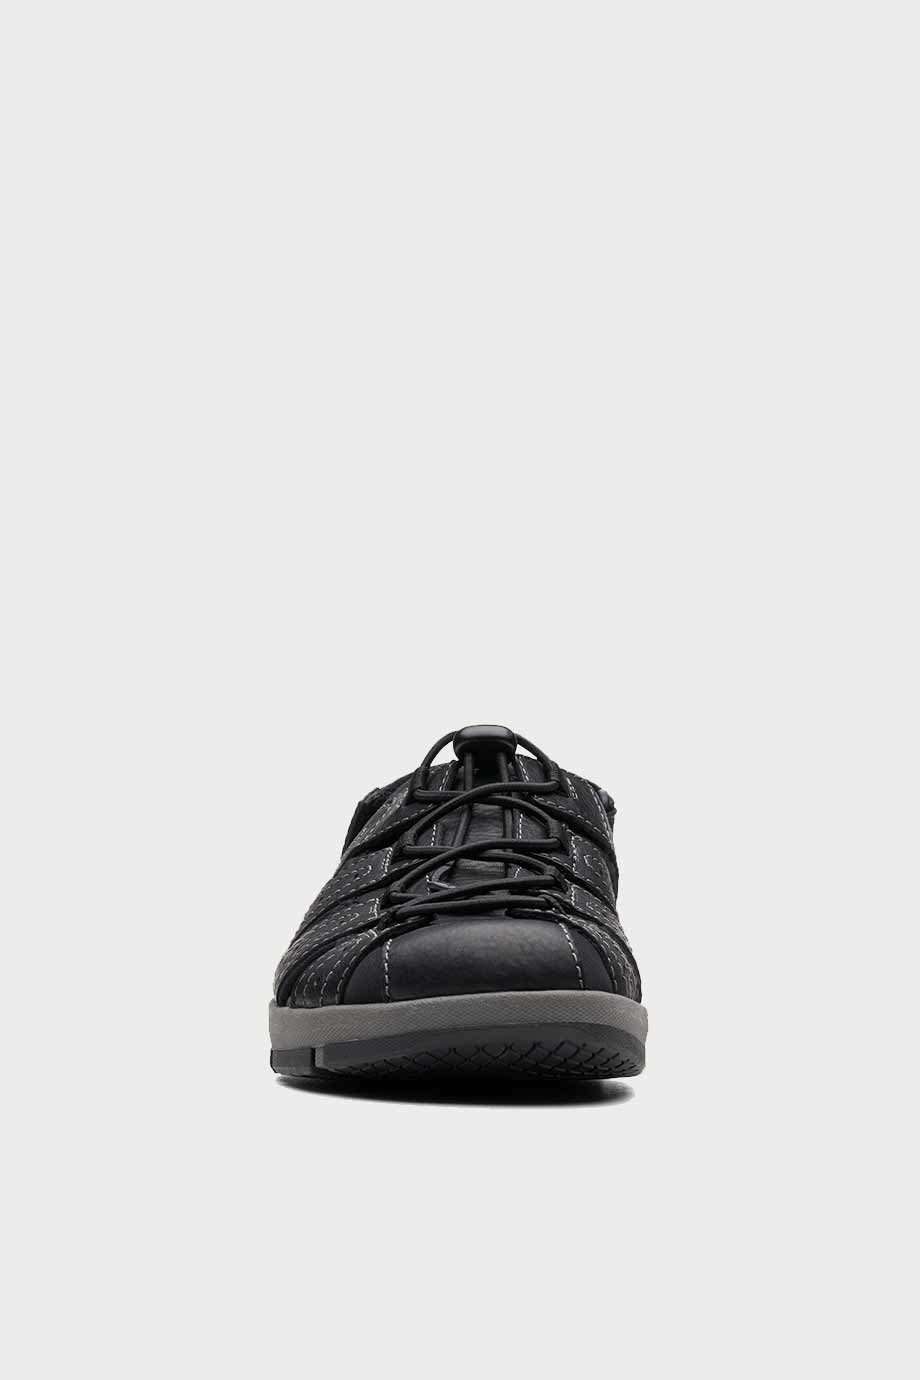 spiridoula metheniti shoes xalkida p Brixby Cove clarks black leather 3